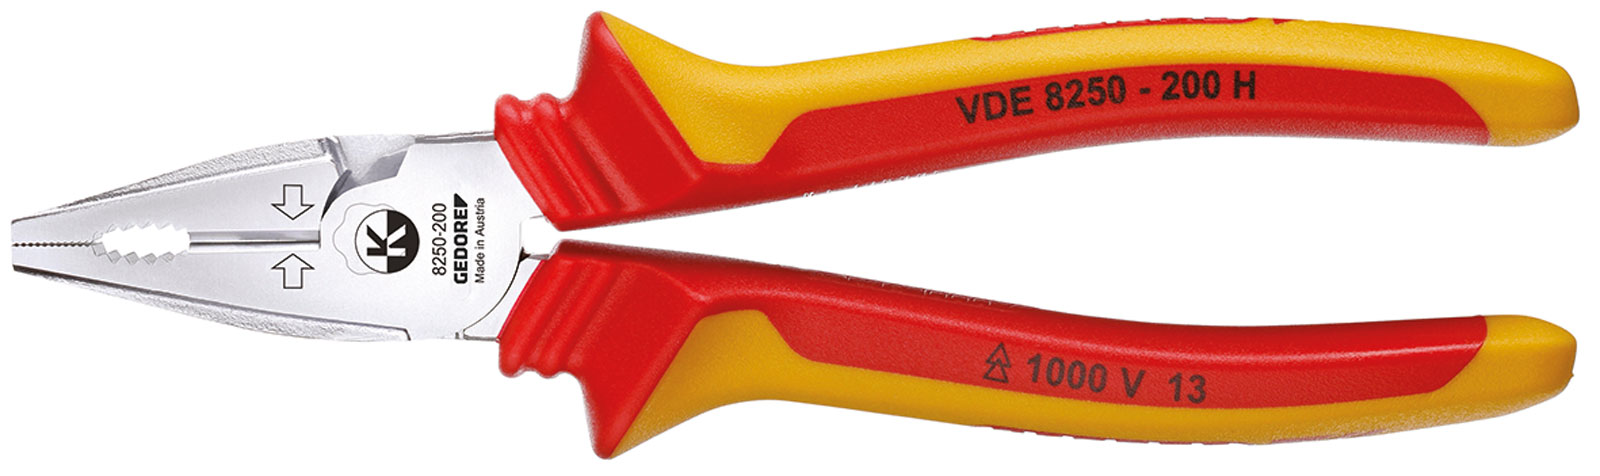 Picture for category VDE 8250 H VDE-Kraft-Kombinationszange mit Hüllenisolierung